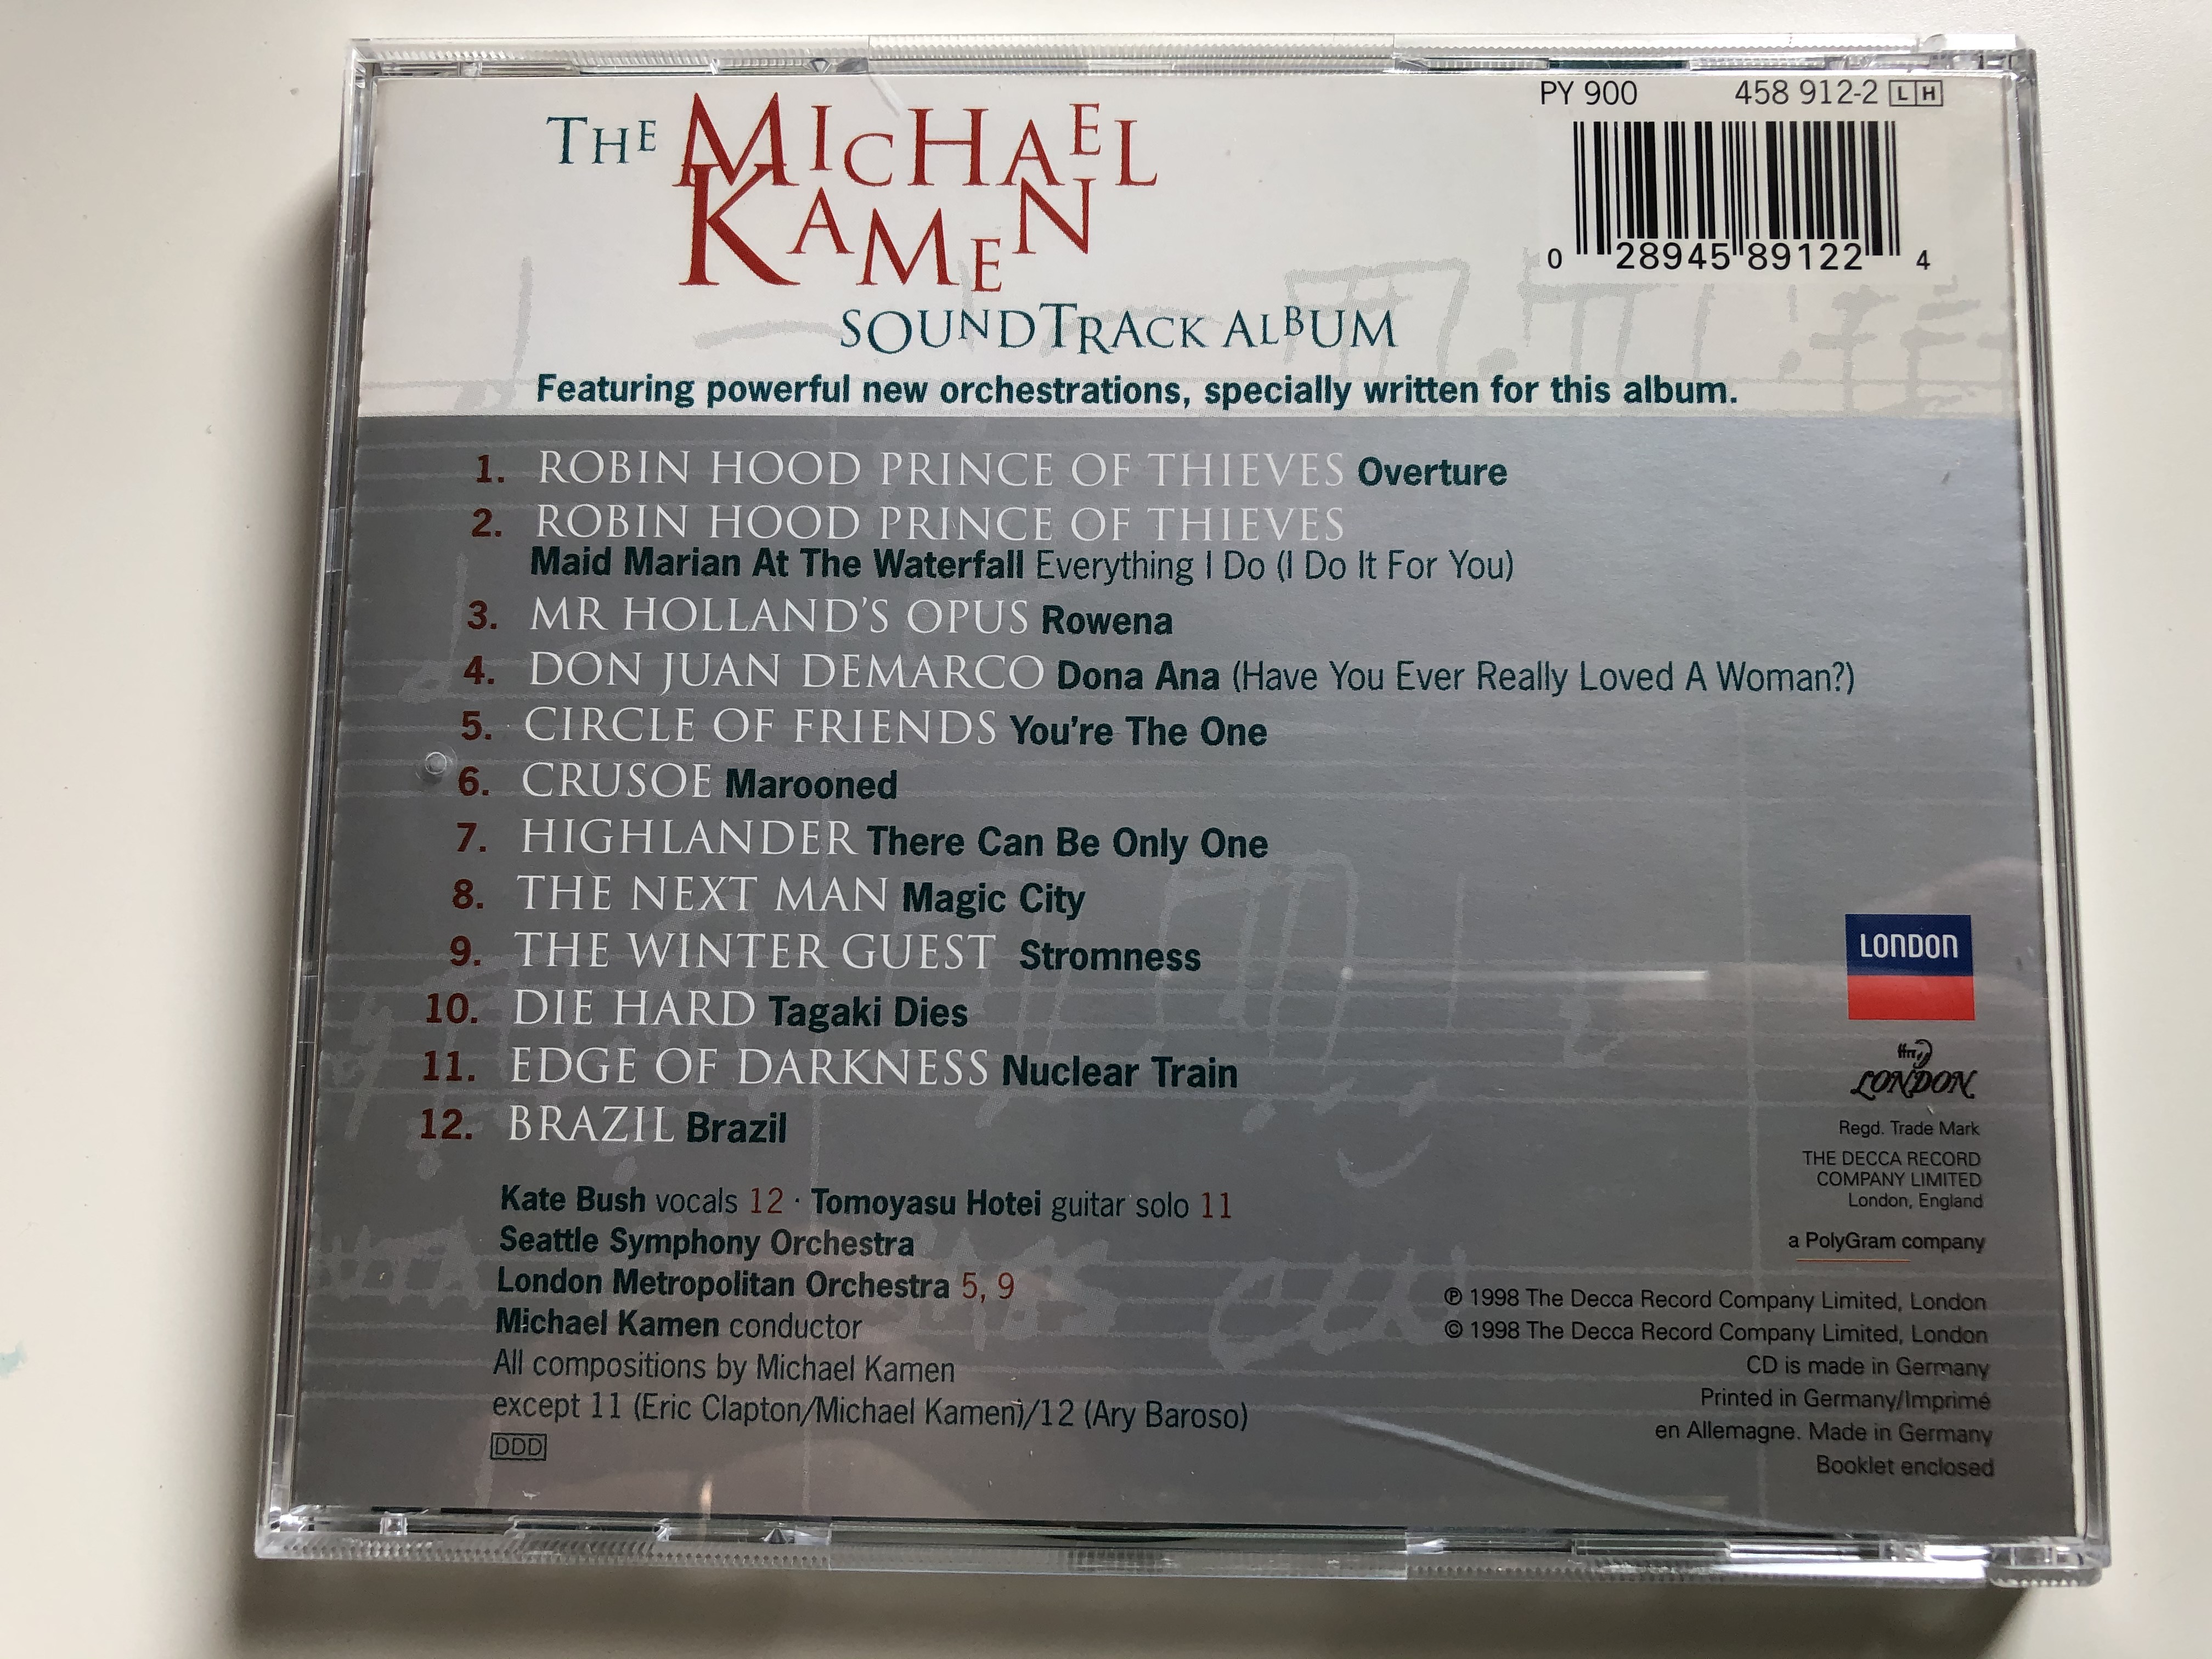 the-michael-kamen-soundtrack-album-london-records-audio-cd-1998-458-912-2-8-.jpg